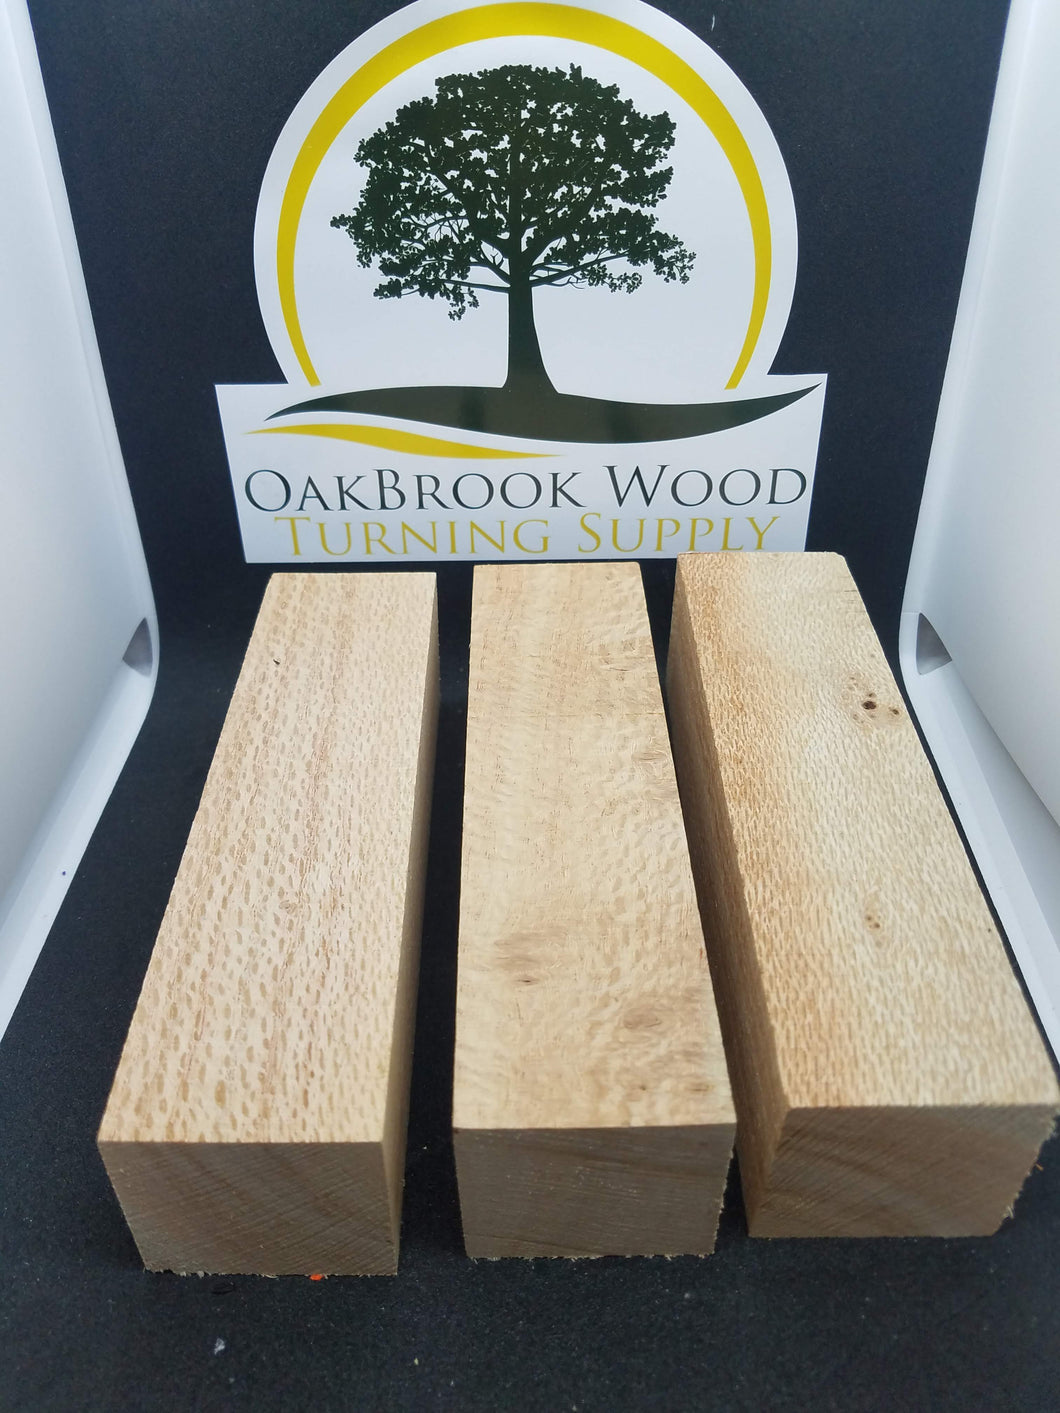 Lacewood - Oakbrook Wood Turning Supply